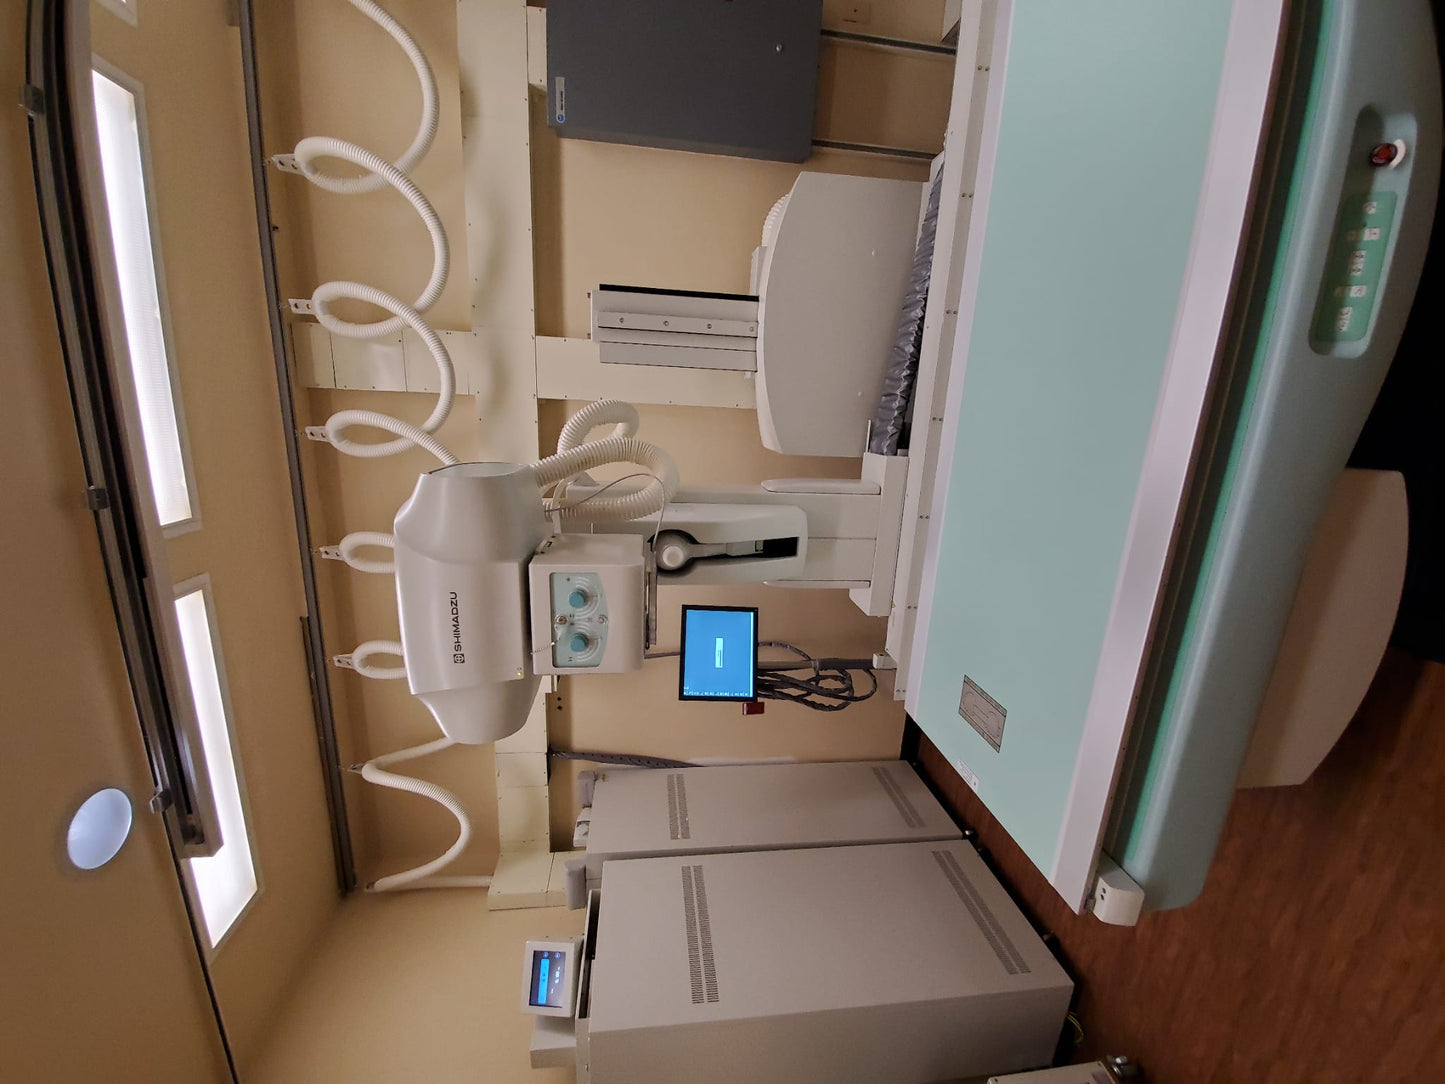 Shimadzu Sonialvision Versa 2015 WIT DAR-8000i, ZS-100IR Fluoroscopy / Rad Room